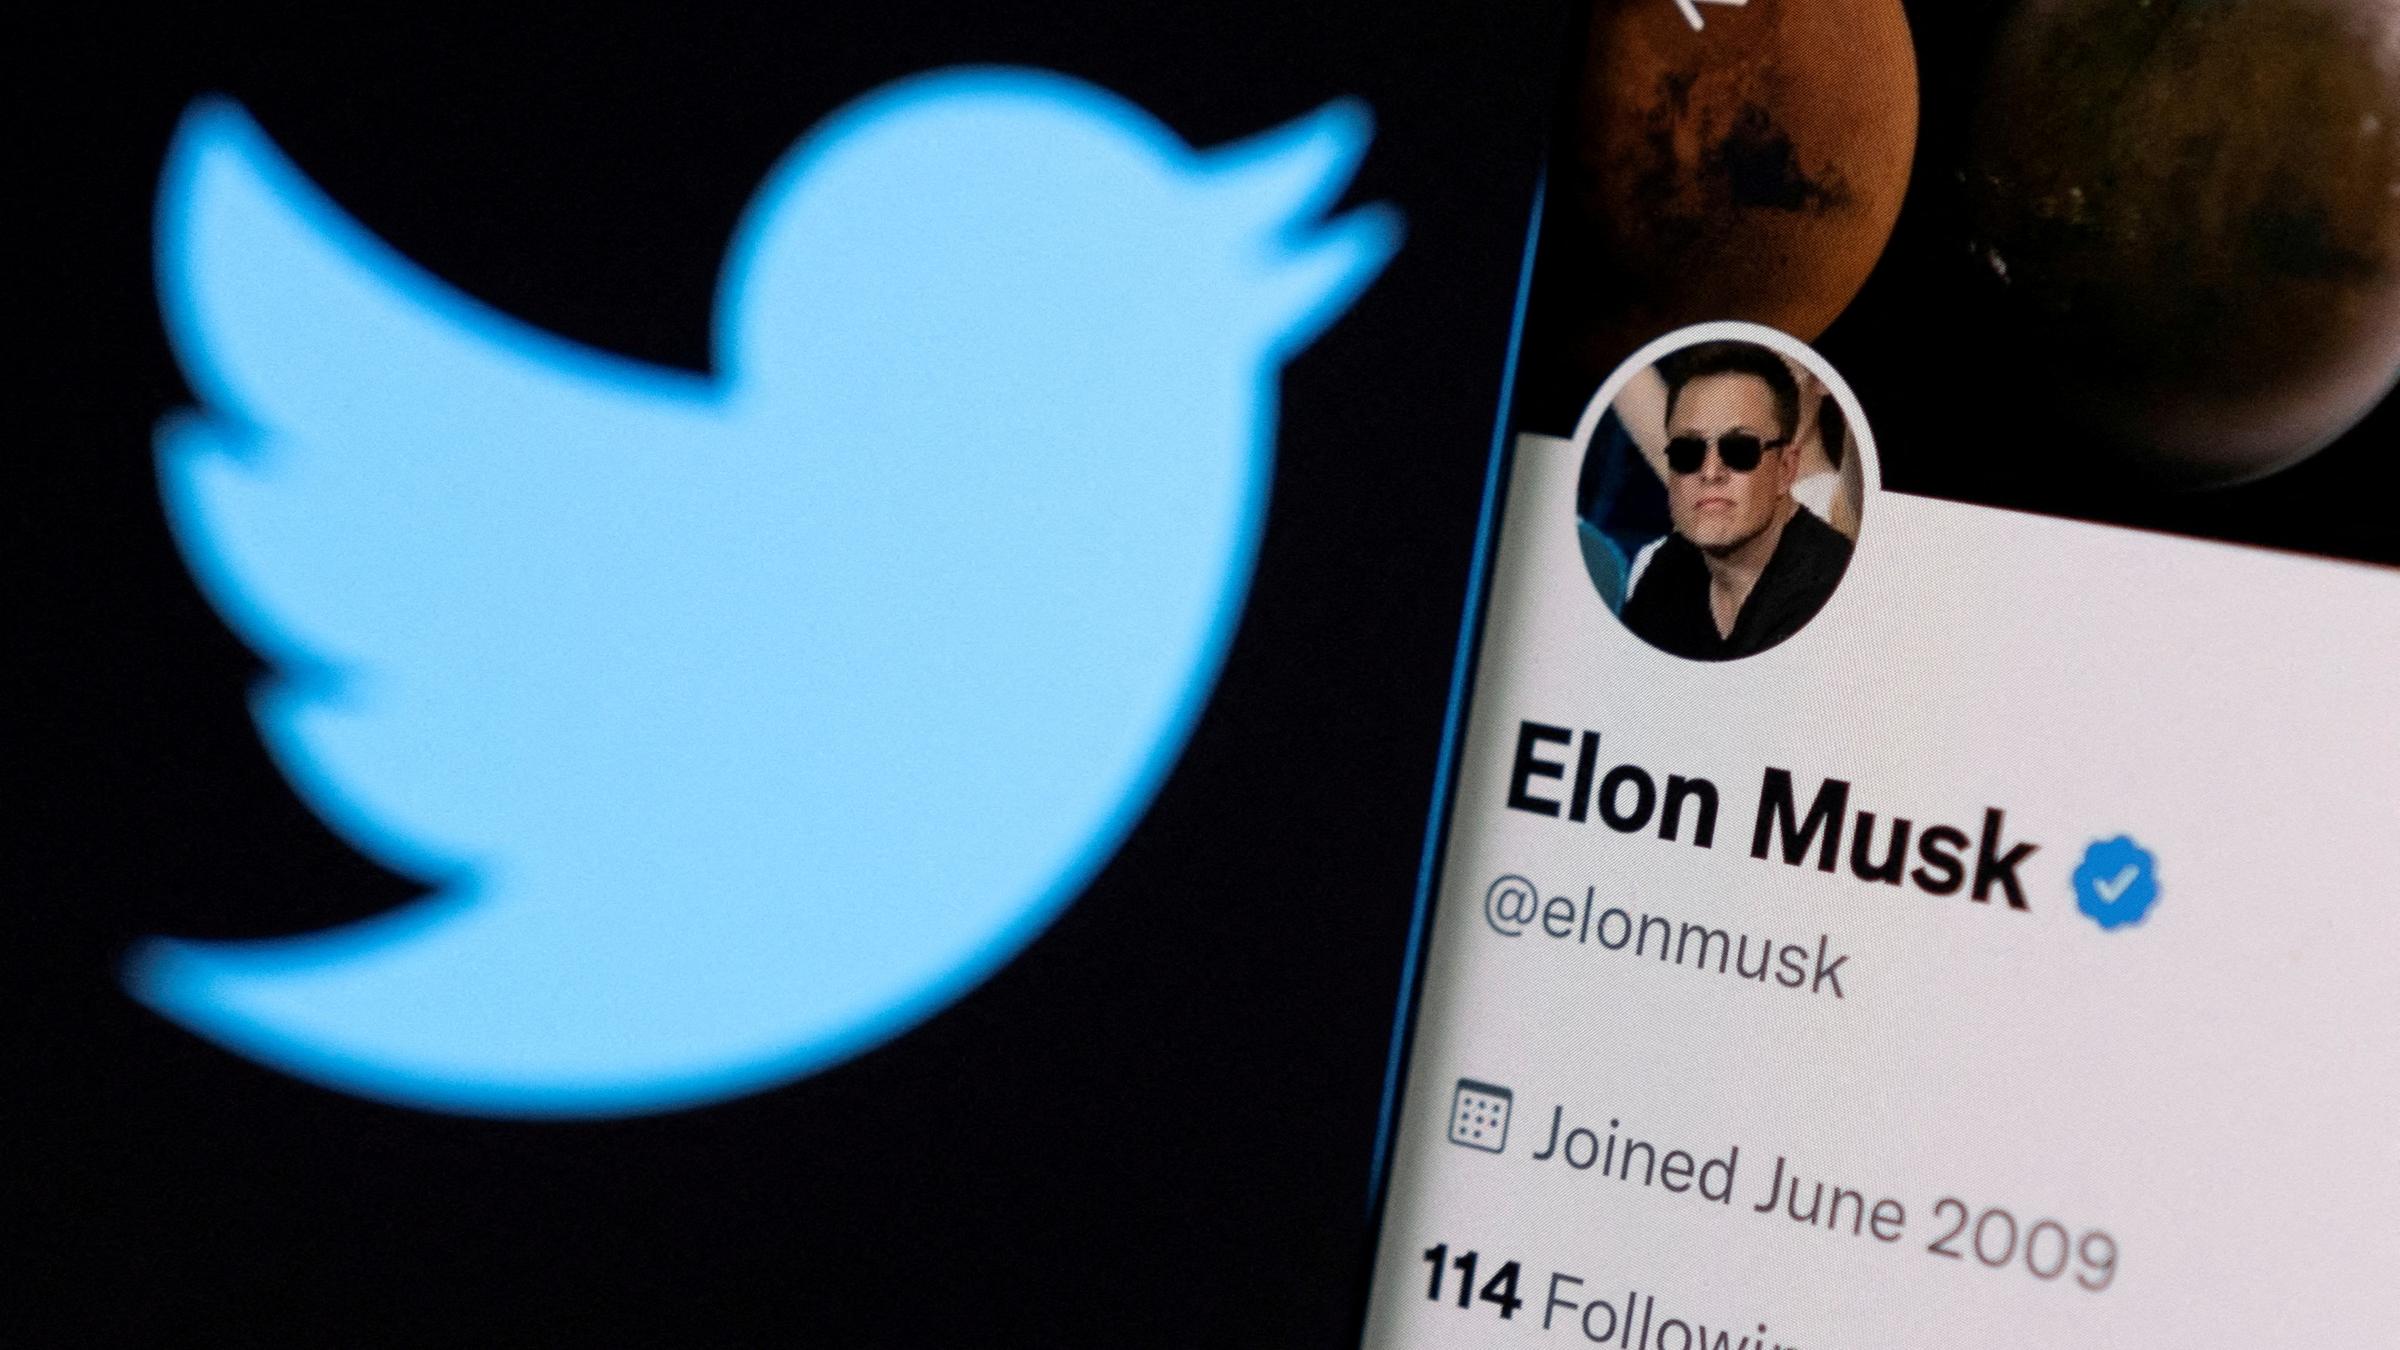 Elon Musk has big plans for Twitter